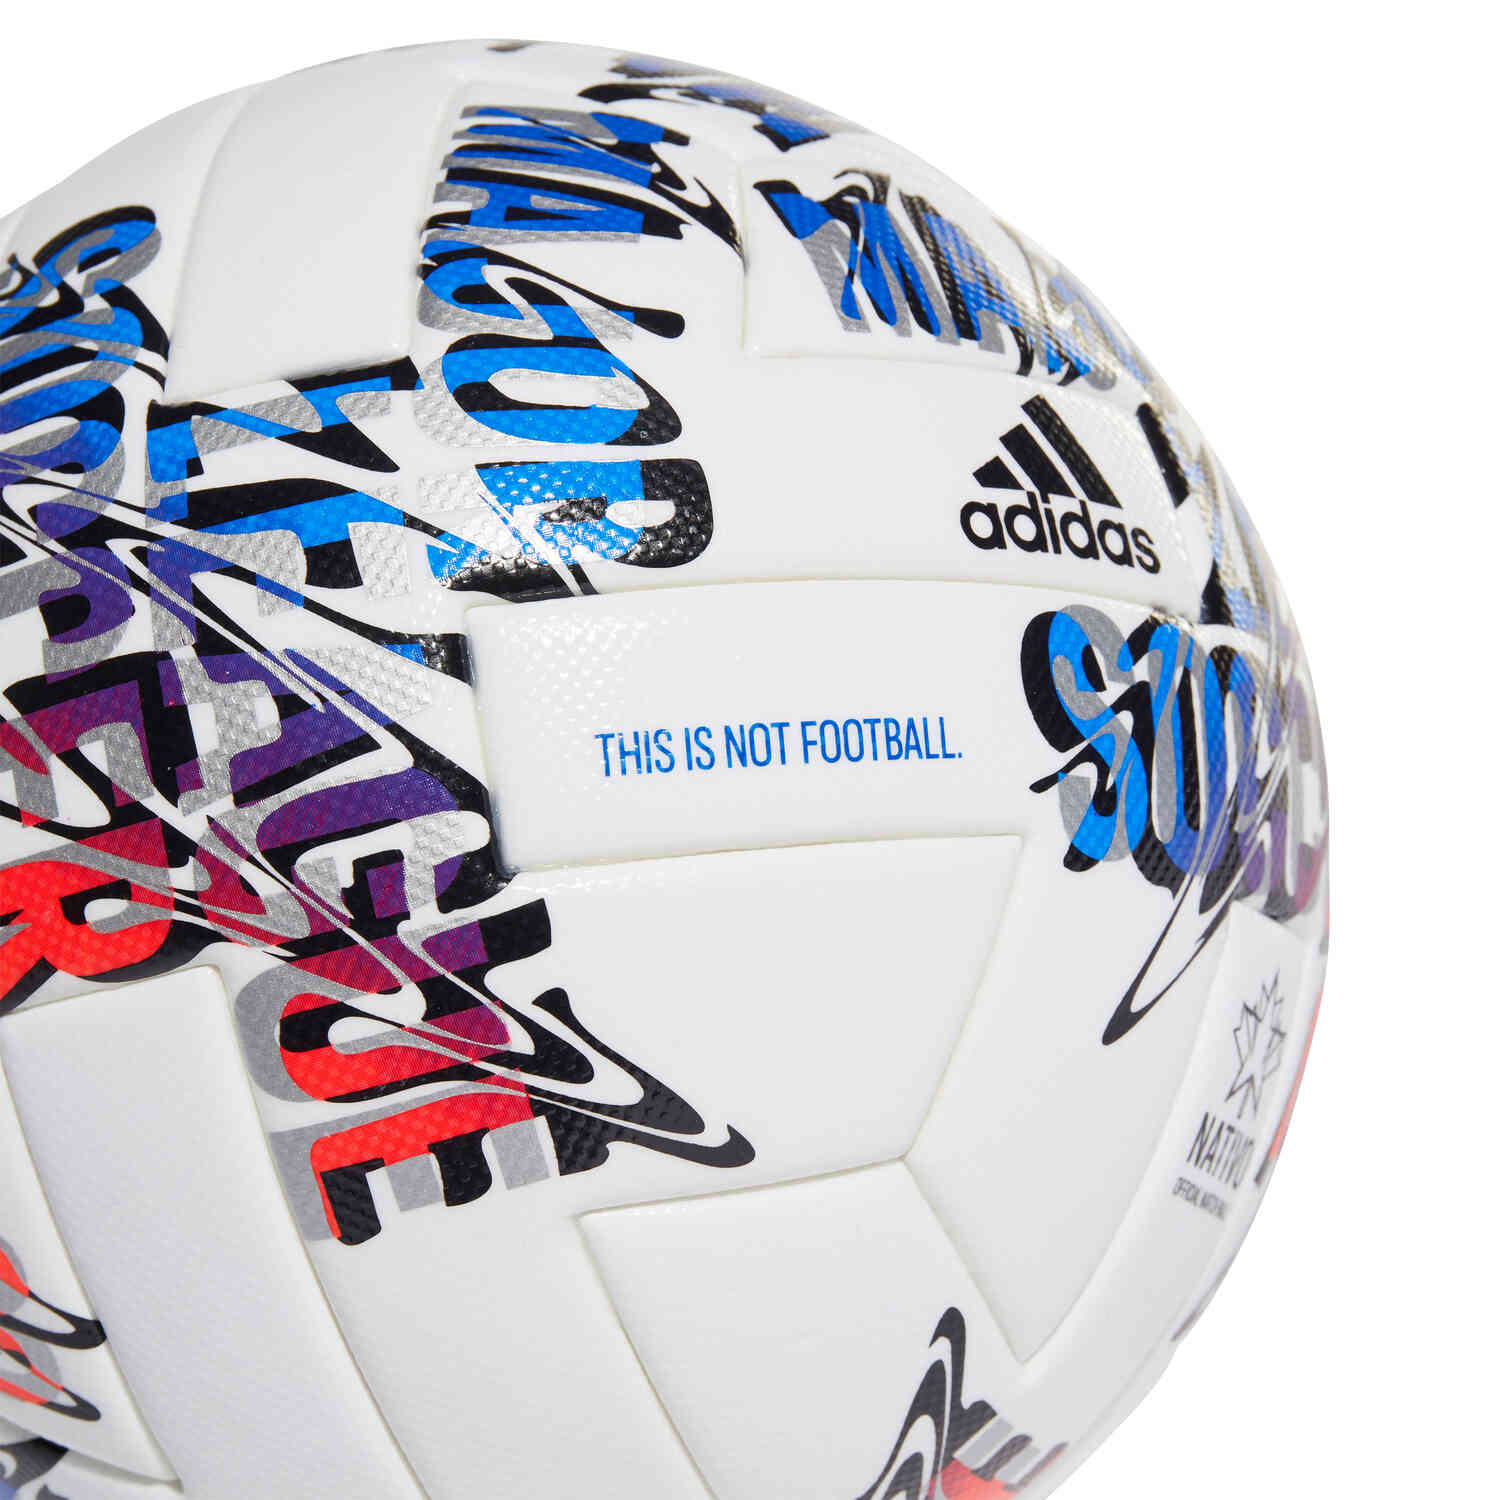 MLS, adidas unveil Orlando-inspired All-Star jersey, match ball